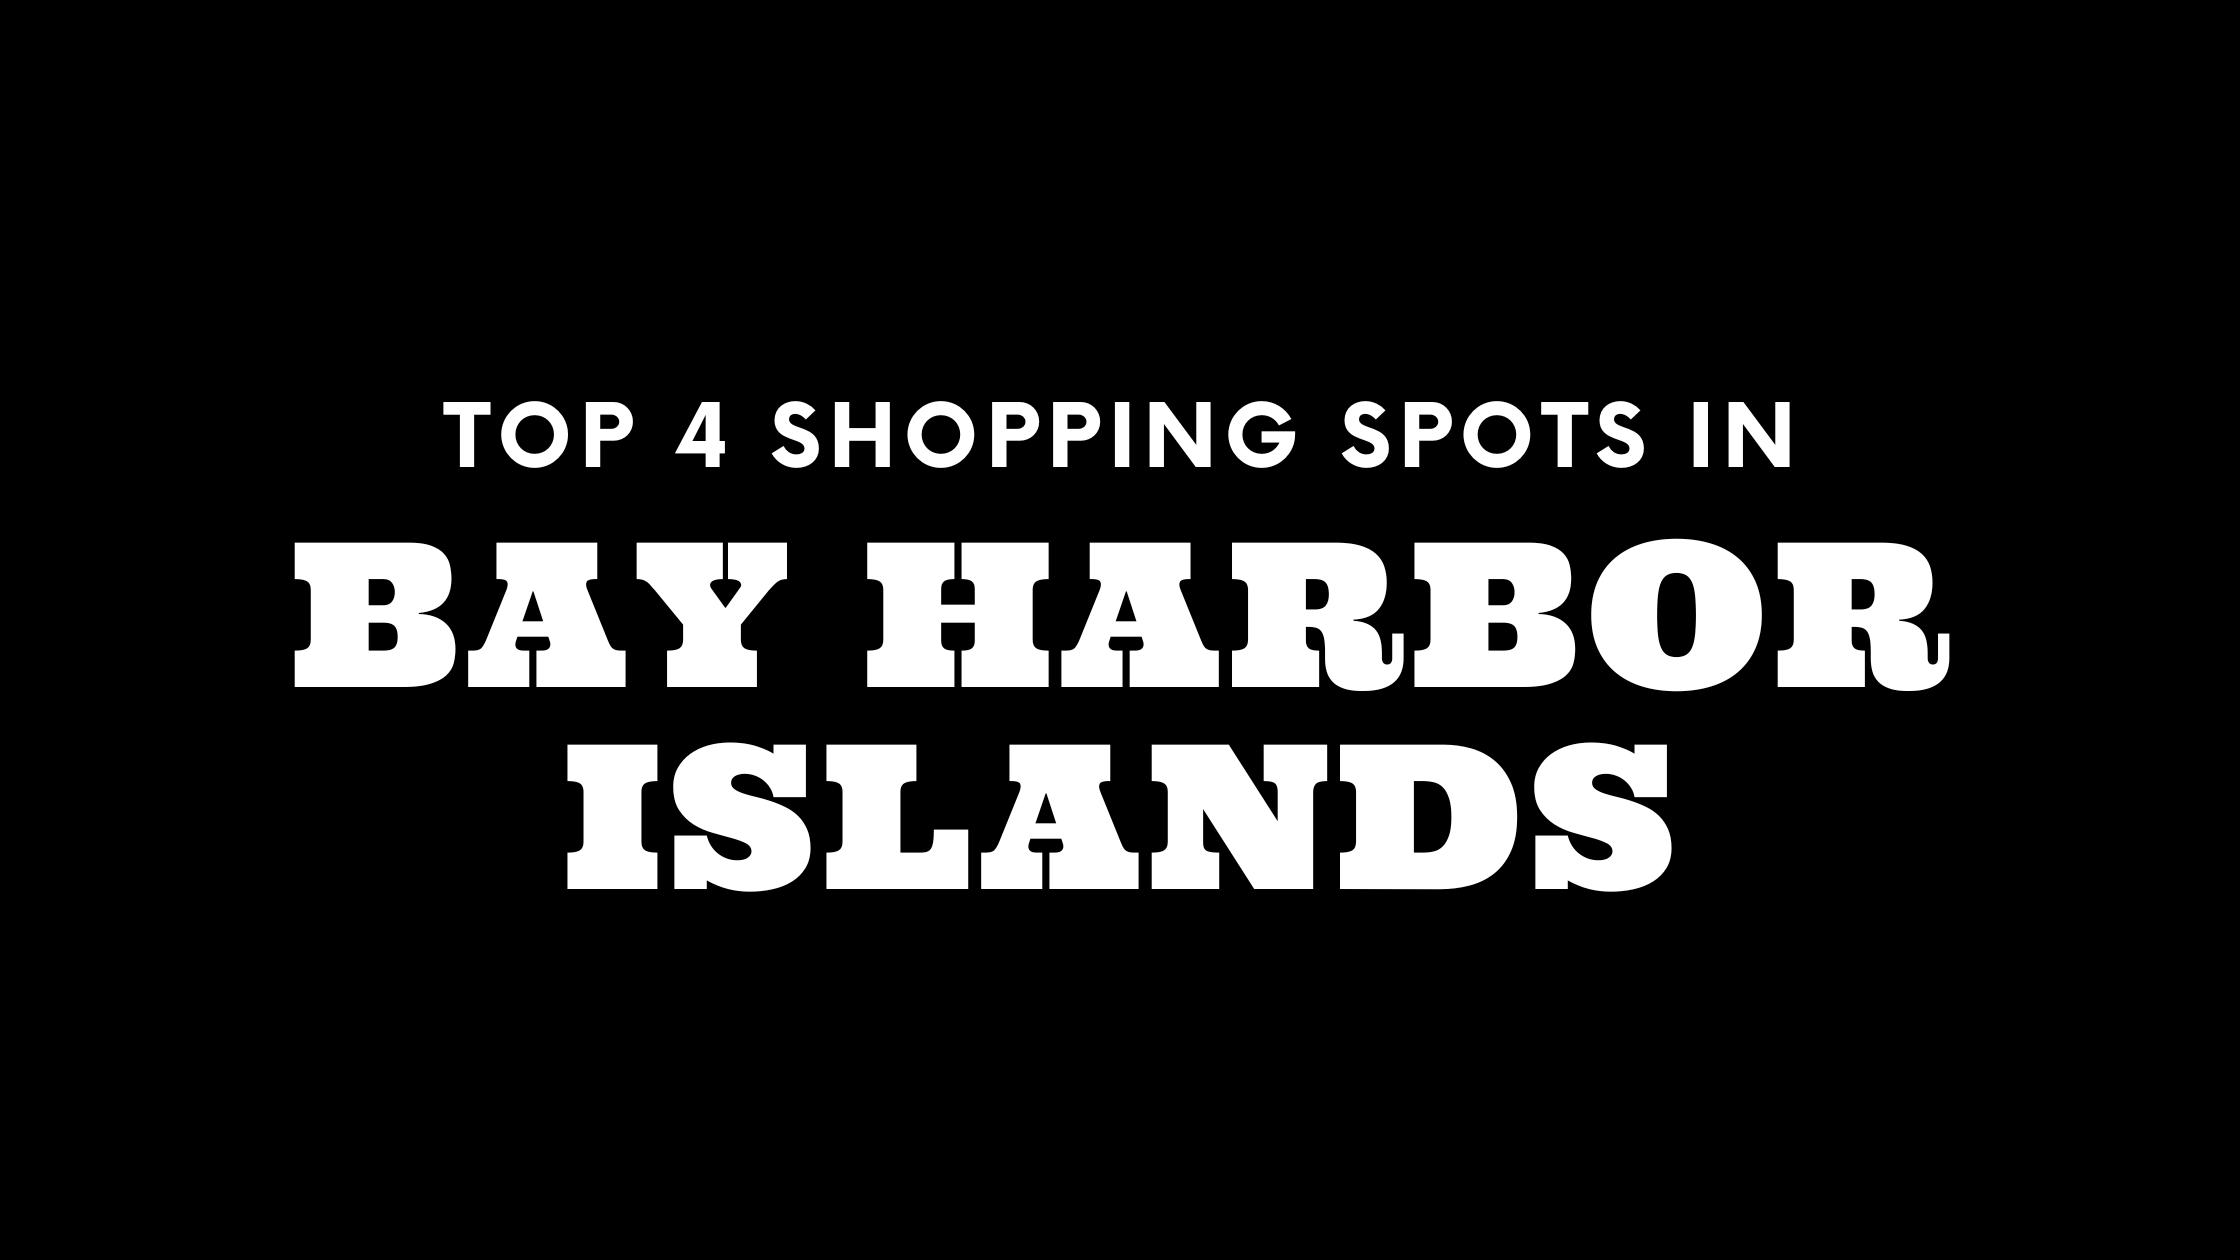 Top 4 Shopping Spots in Bay Harbor Islands